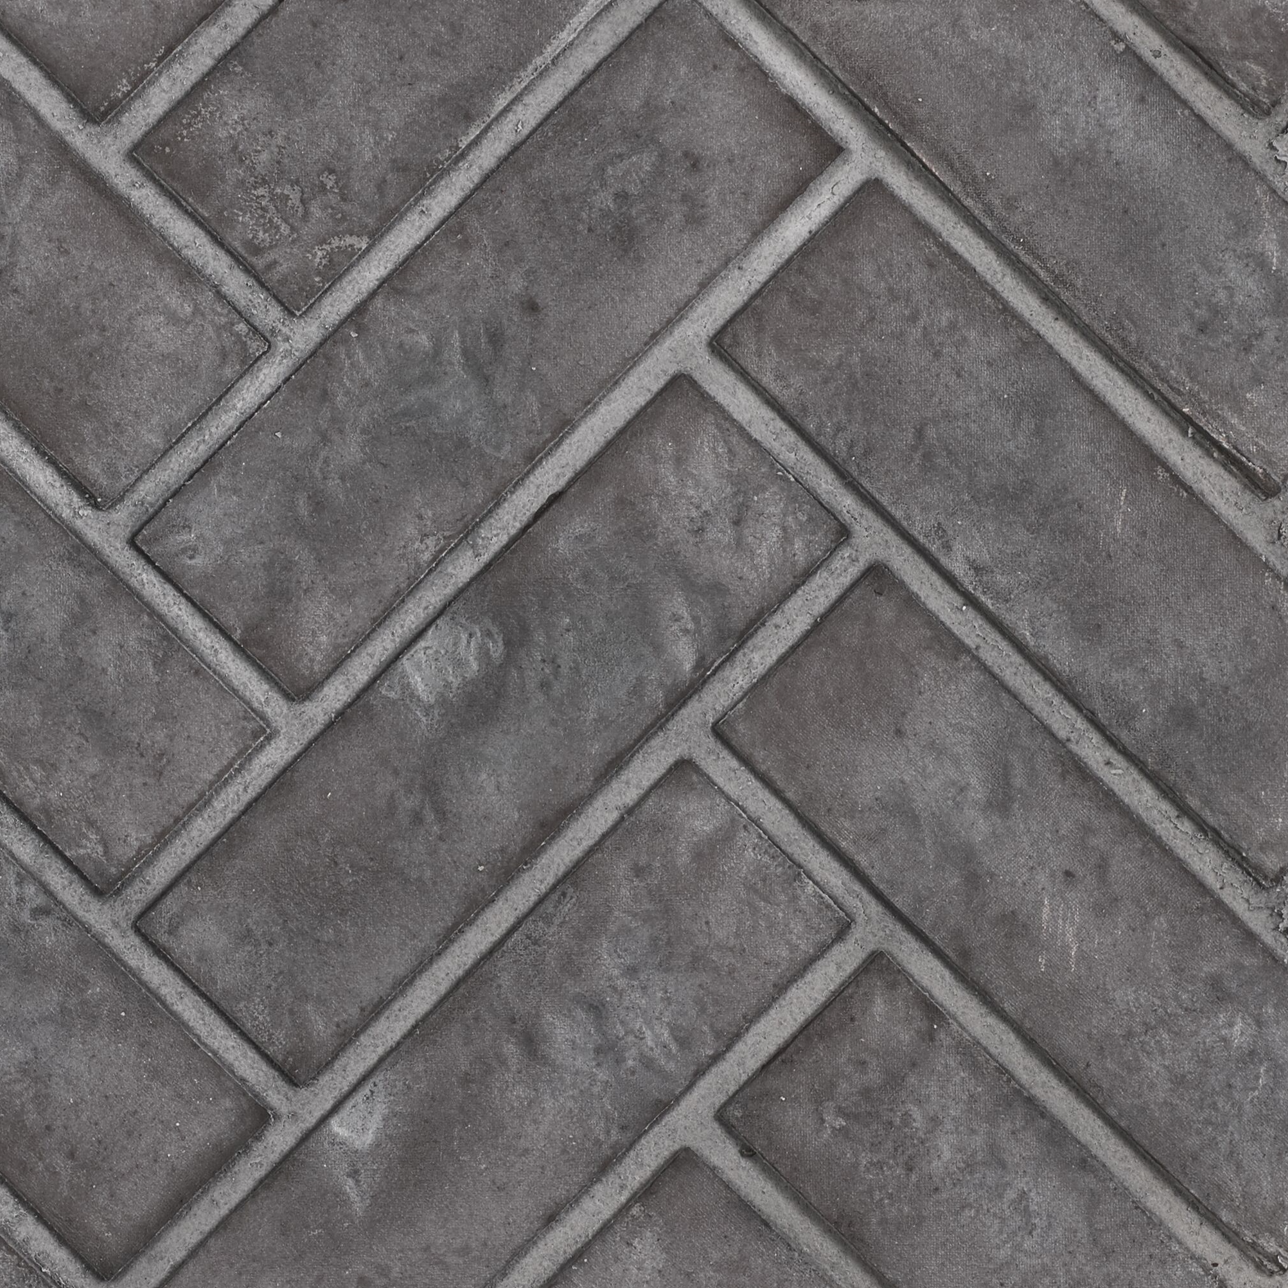 Napoleon Decorative Brick Panels Westminster Grey Herringbone - DBPEX36WH